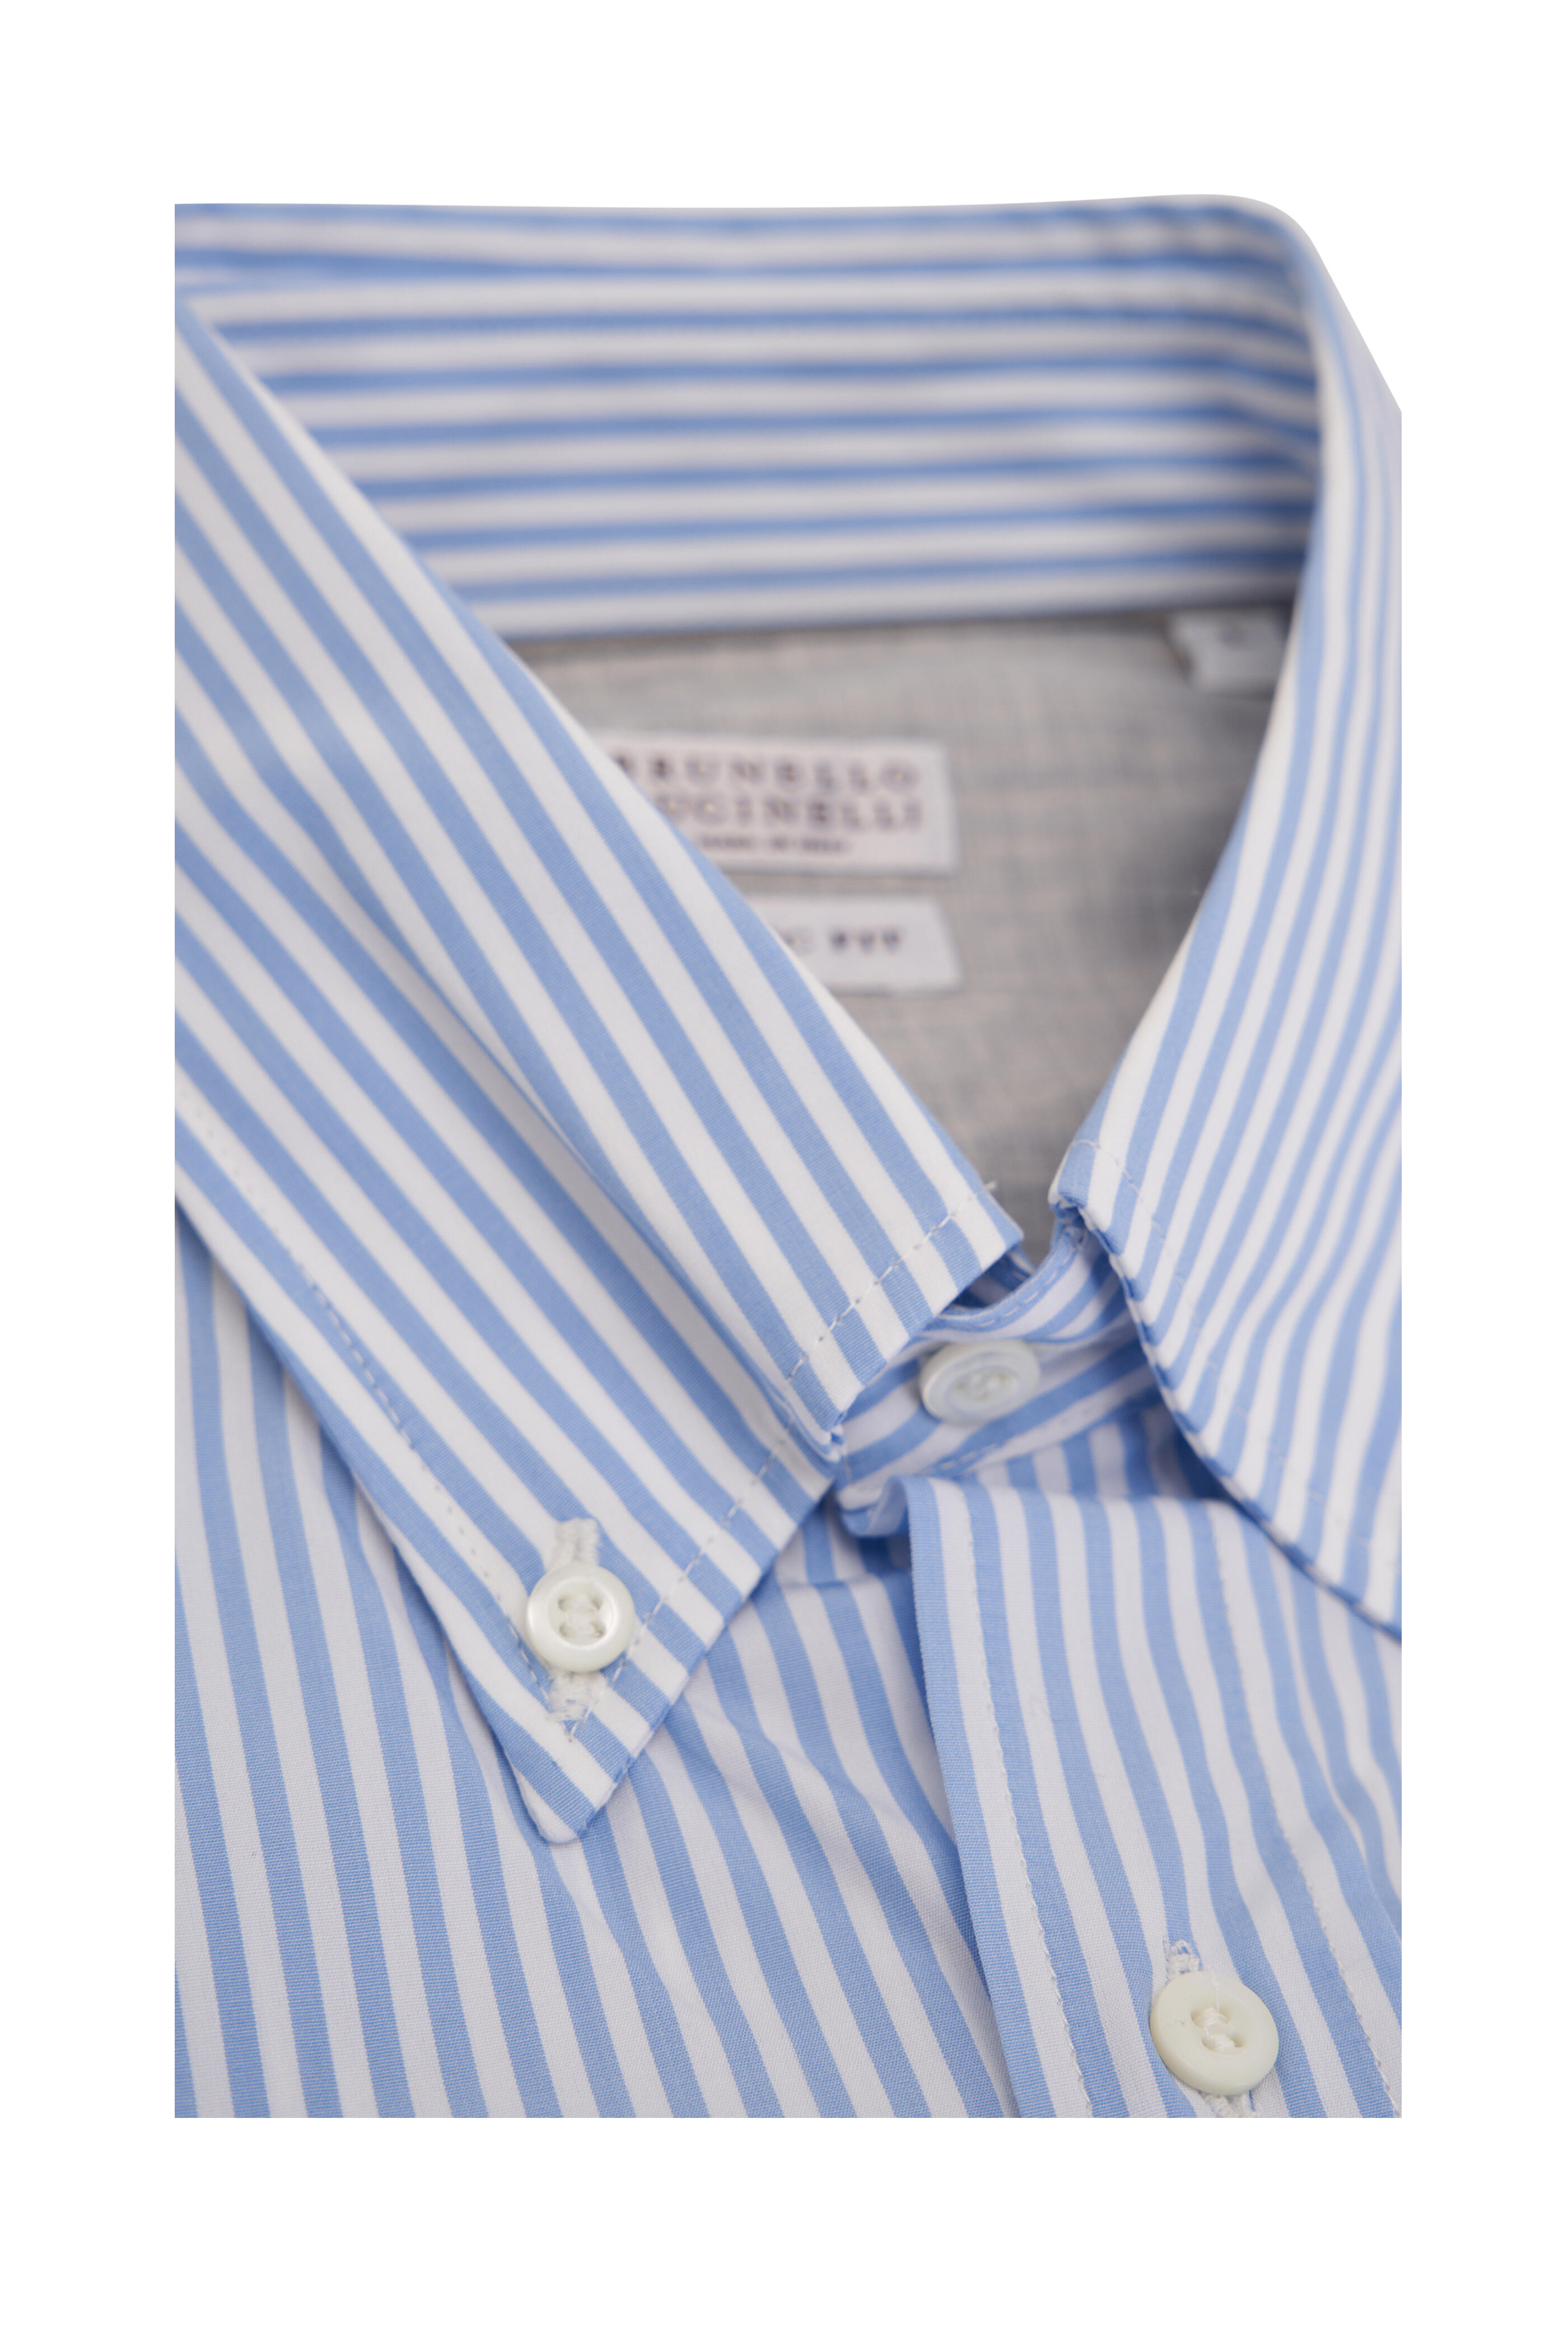 Brunello Cucinelli - Blue & White Stripe Cotton Sport Shirt